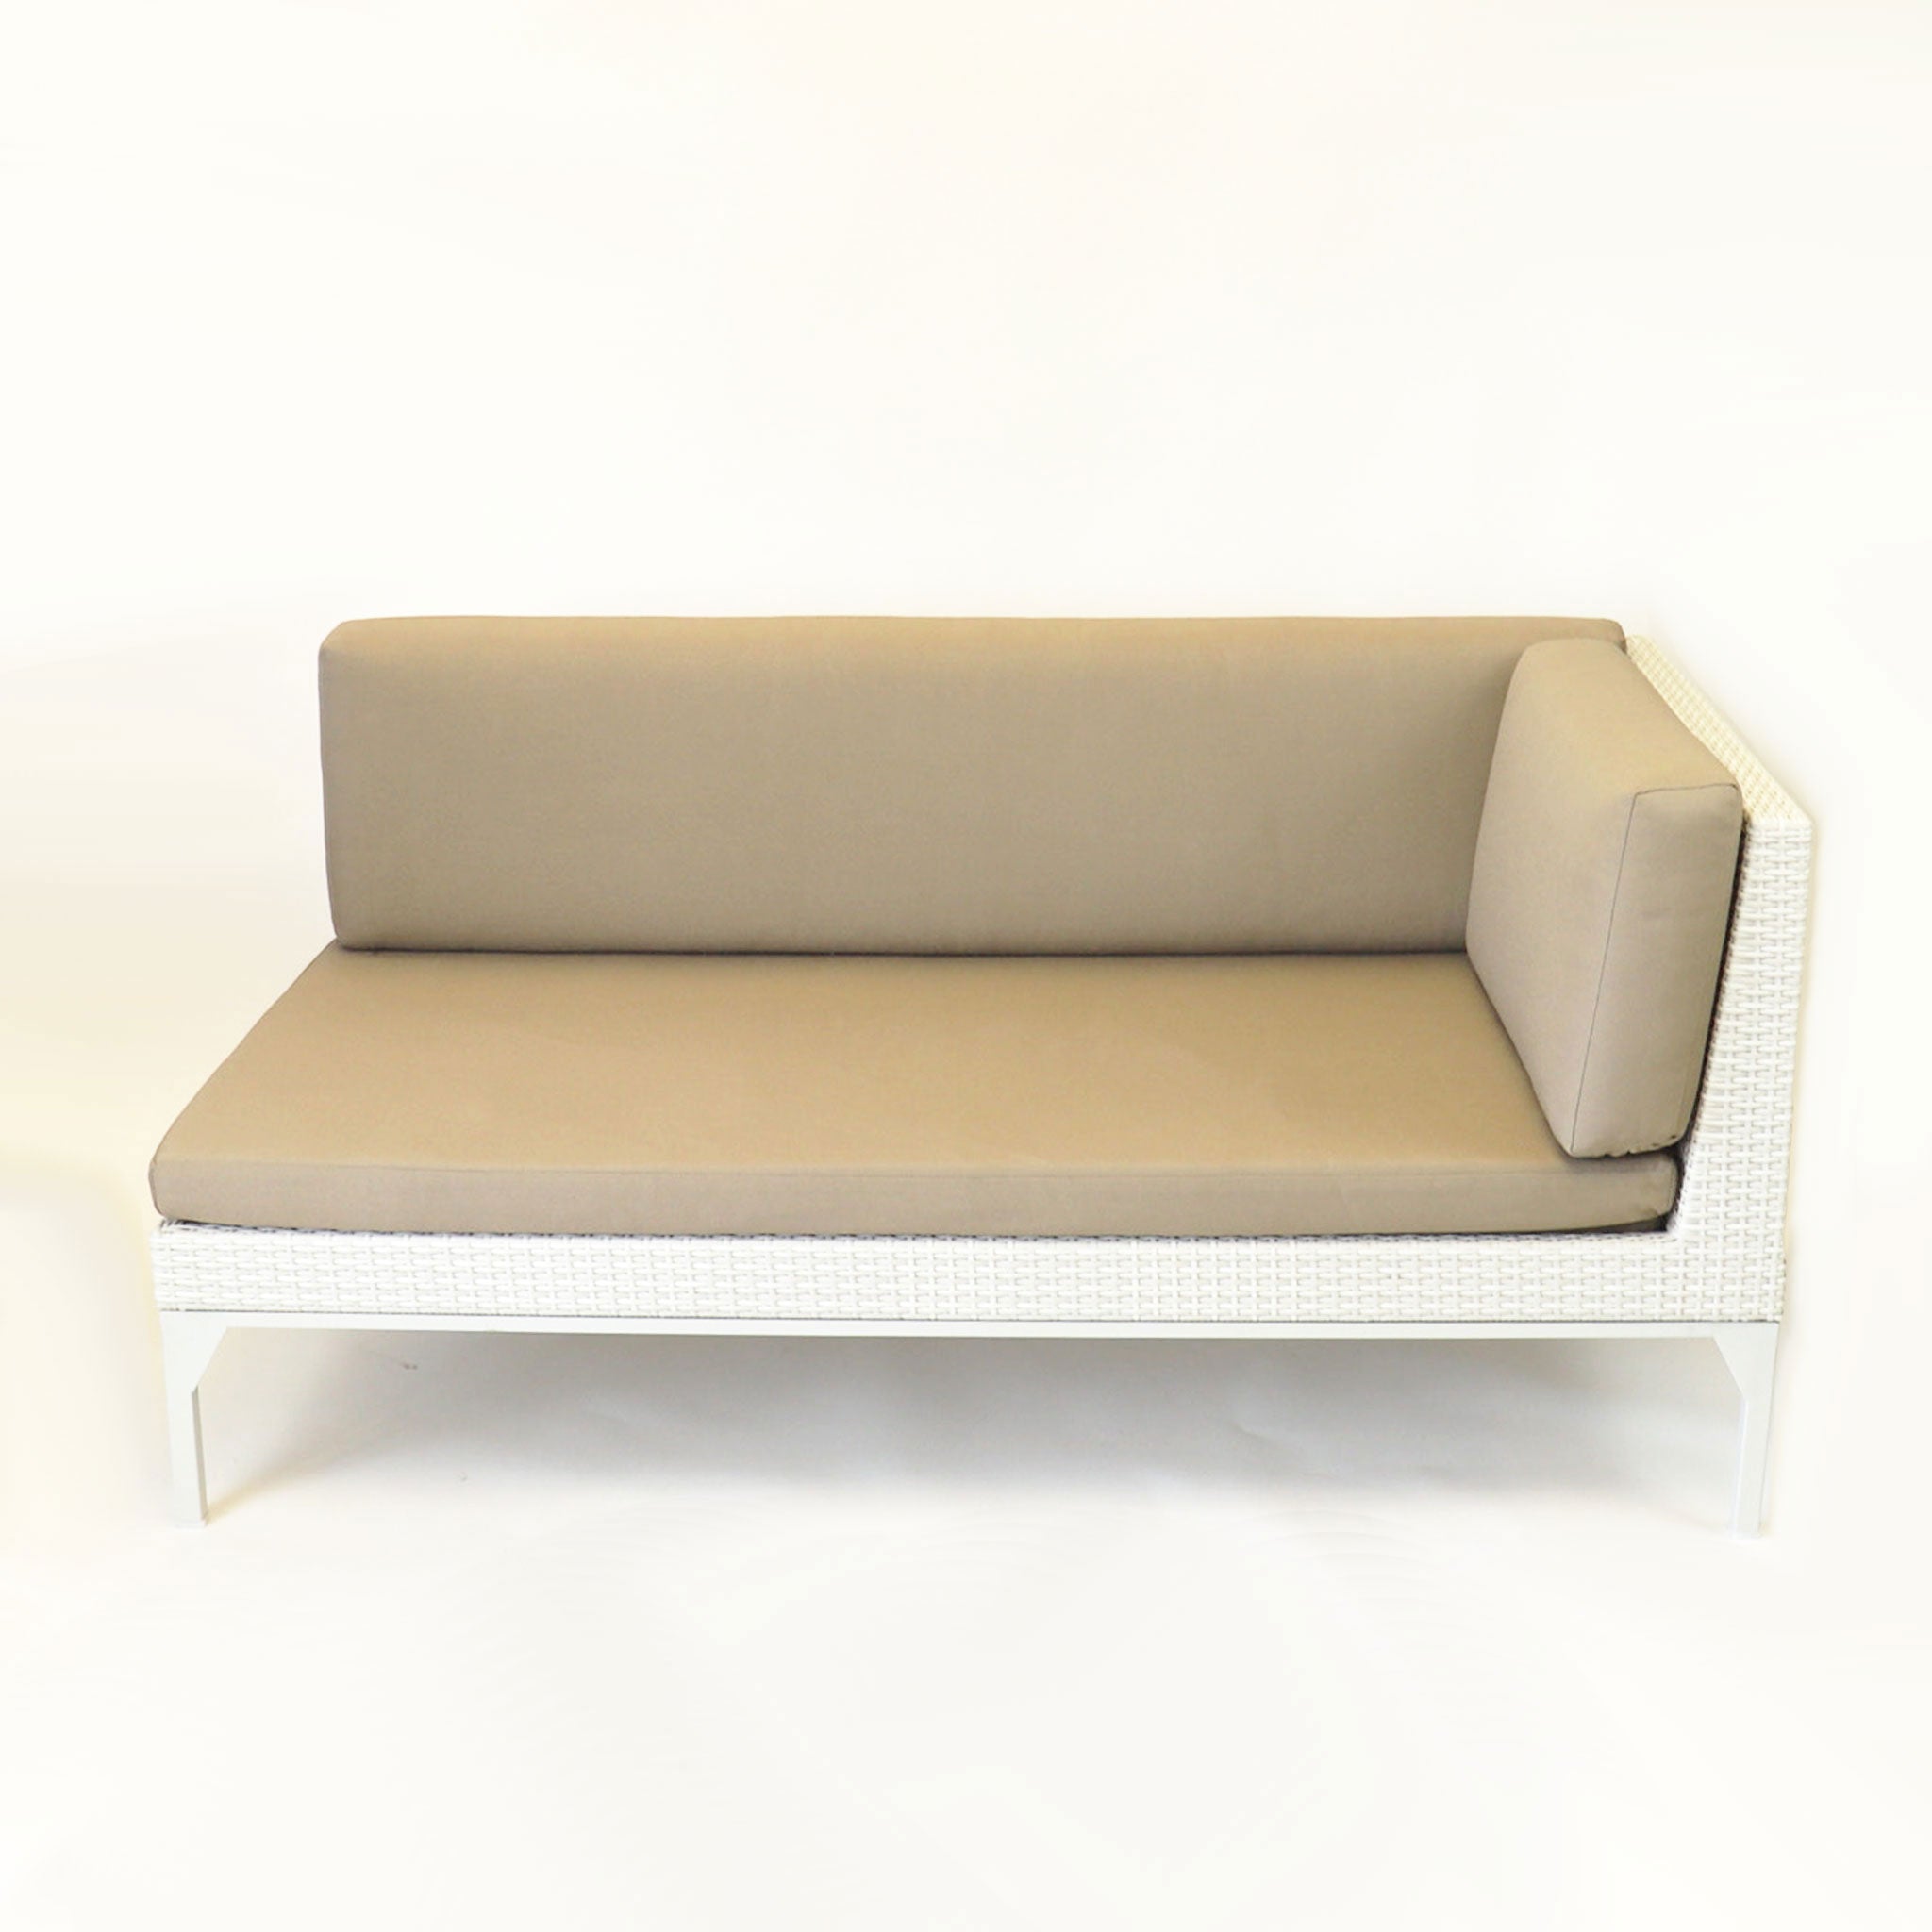 Wicker Deep Seated 'MU' Left or Right Sofa with 'Sunproof' Cushions